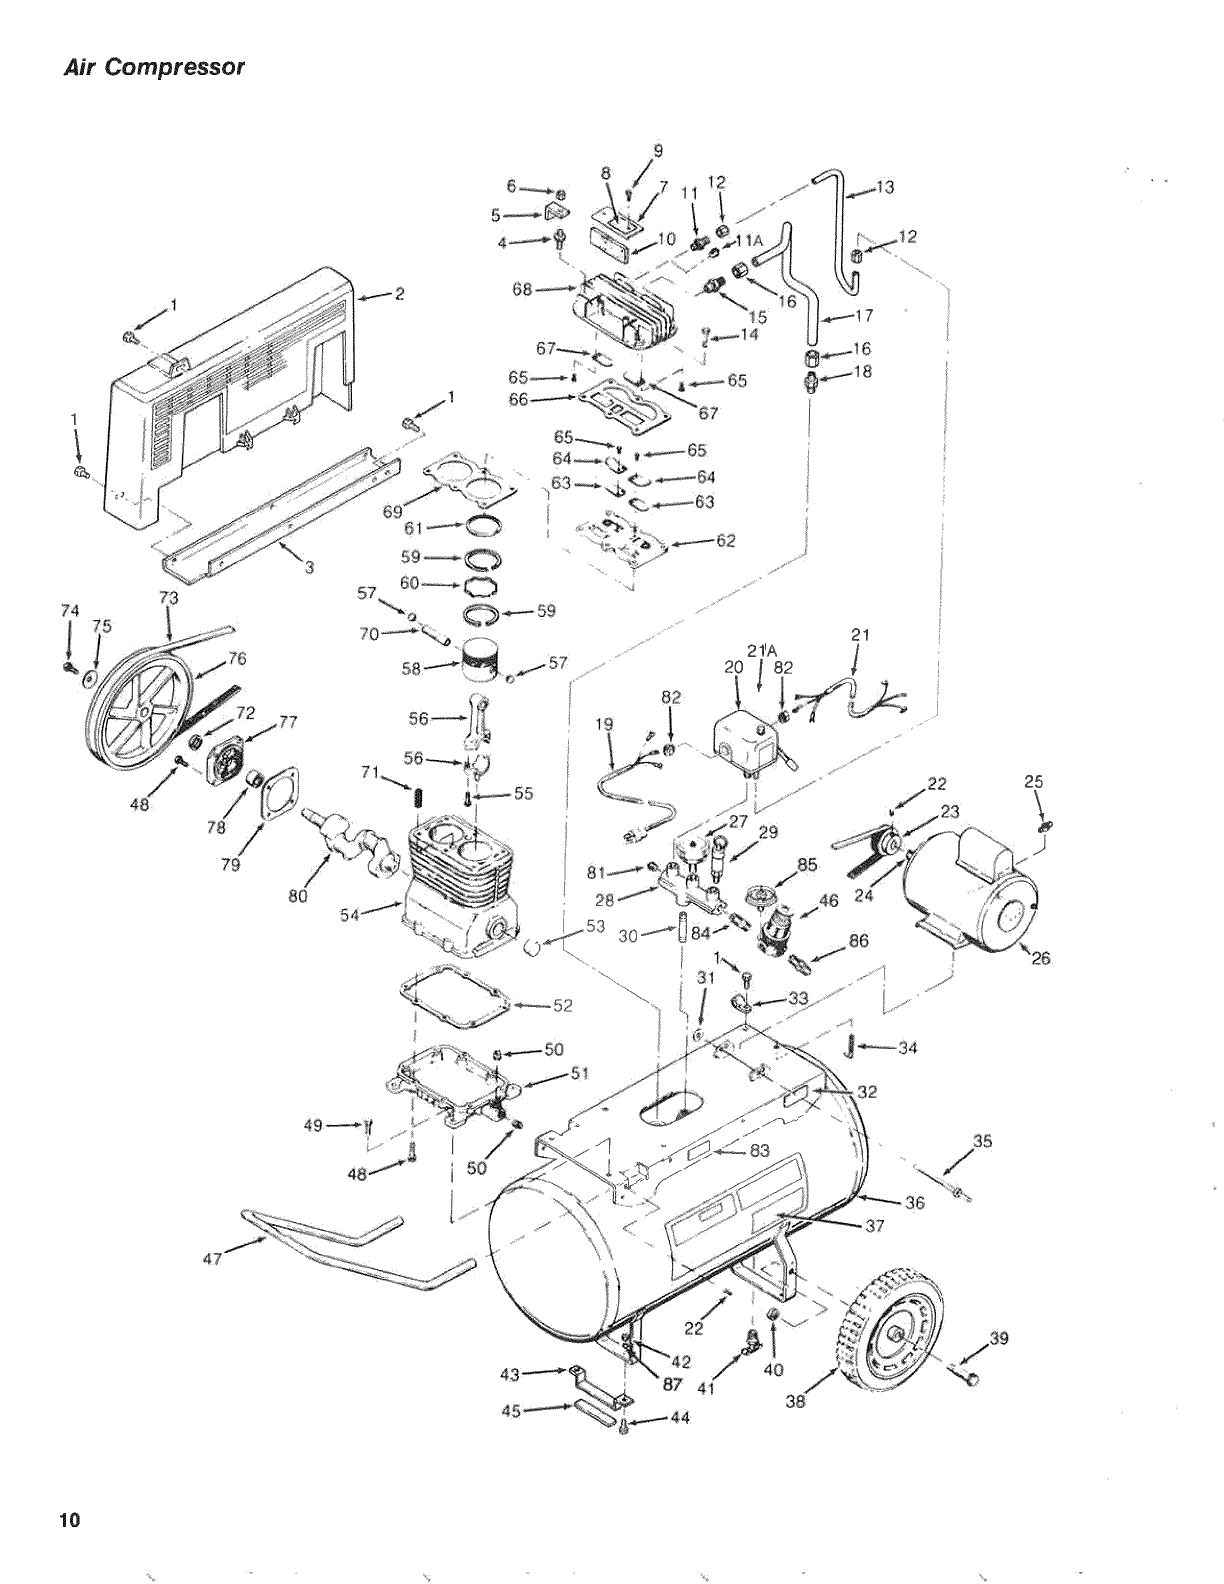 Craftsman Air Compressor Manual